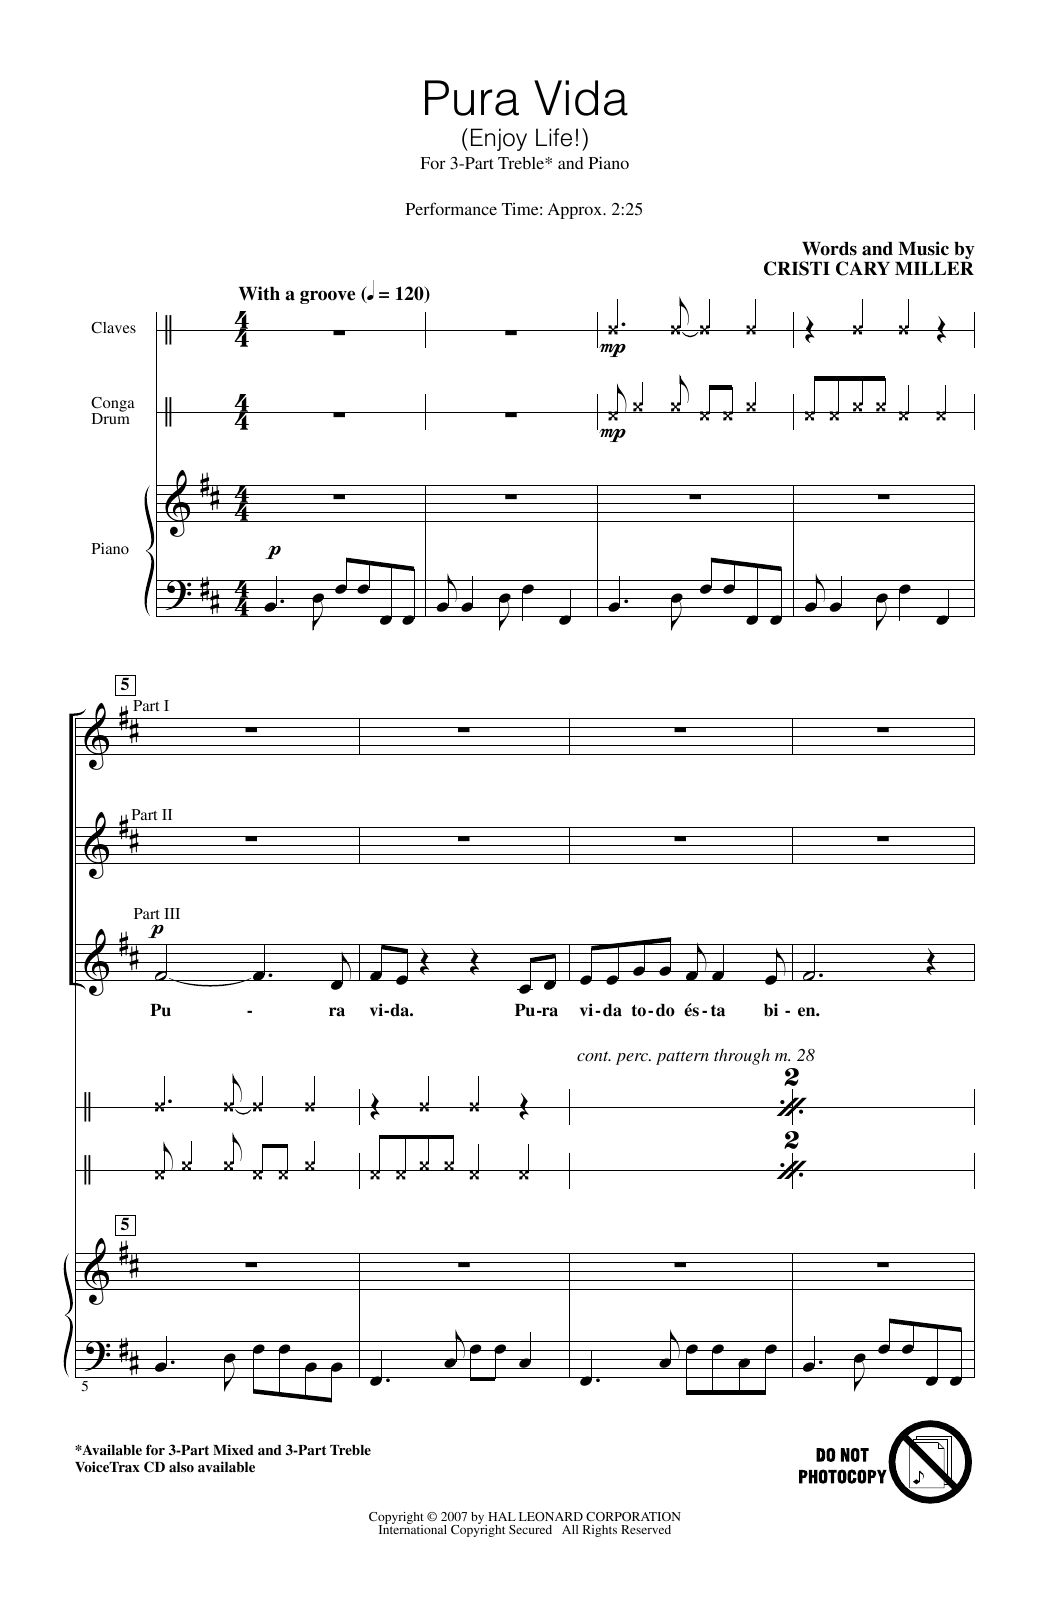 Cristi Cary Miller Pura Vida (Enjoy Life) Sheet Music Notes & Chords for 3-Part Mixed Choir - Download or Print PDF